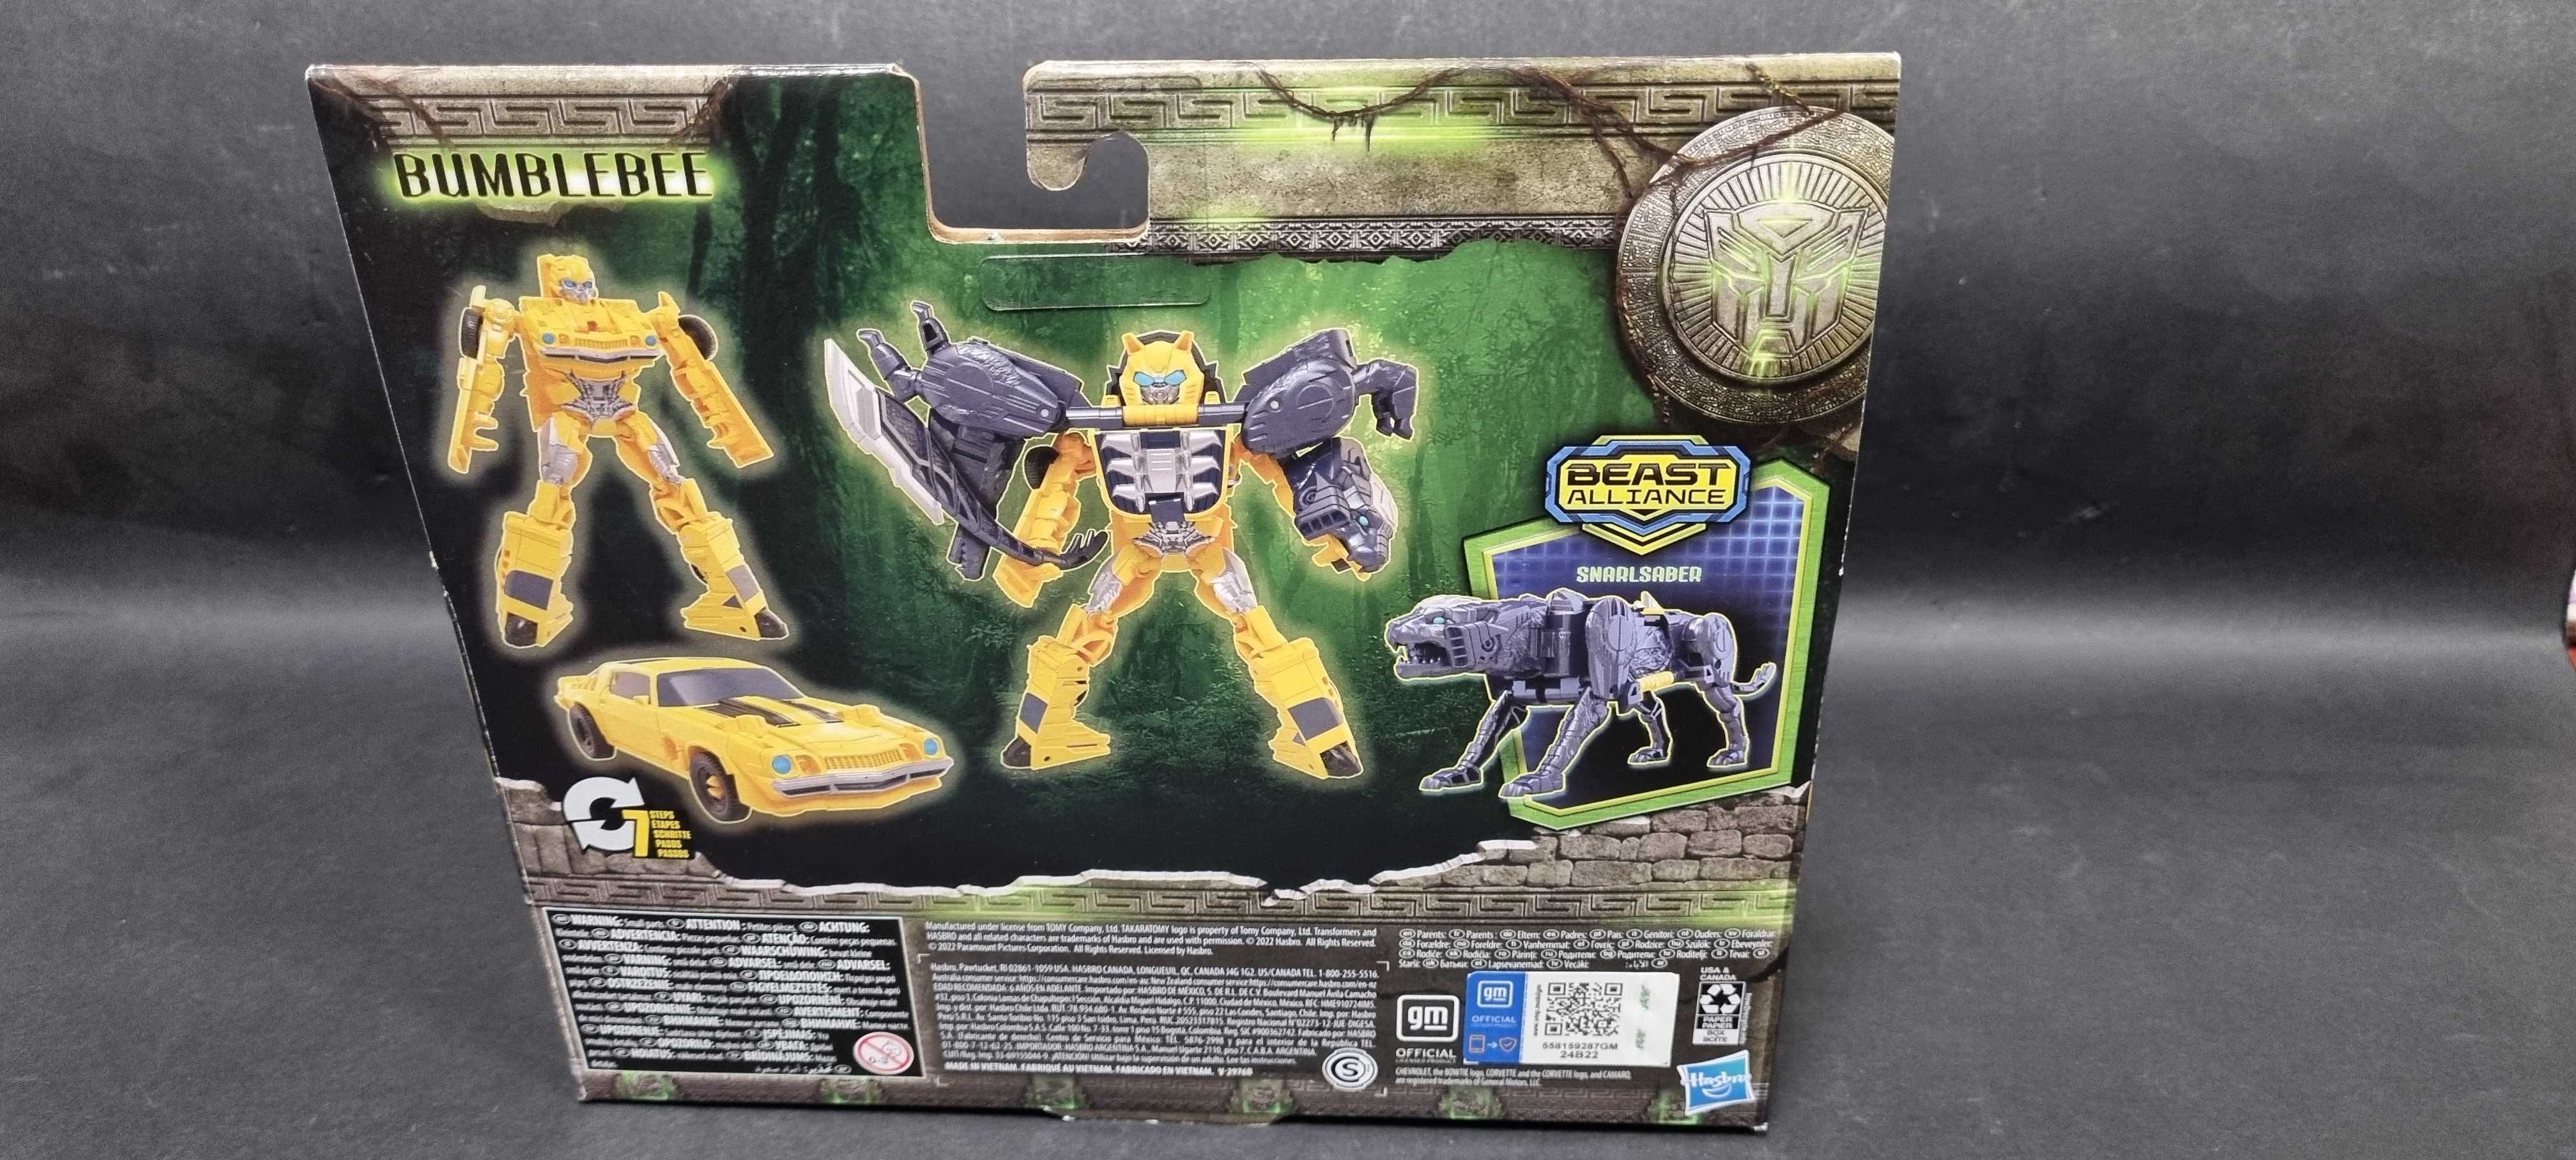 Hasbro, figurka Transformers, Bumblebee&Snarlsaber,